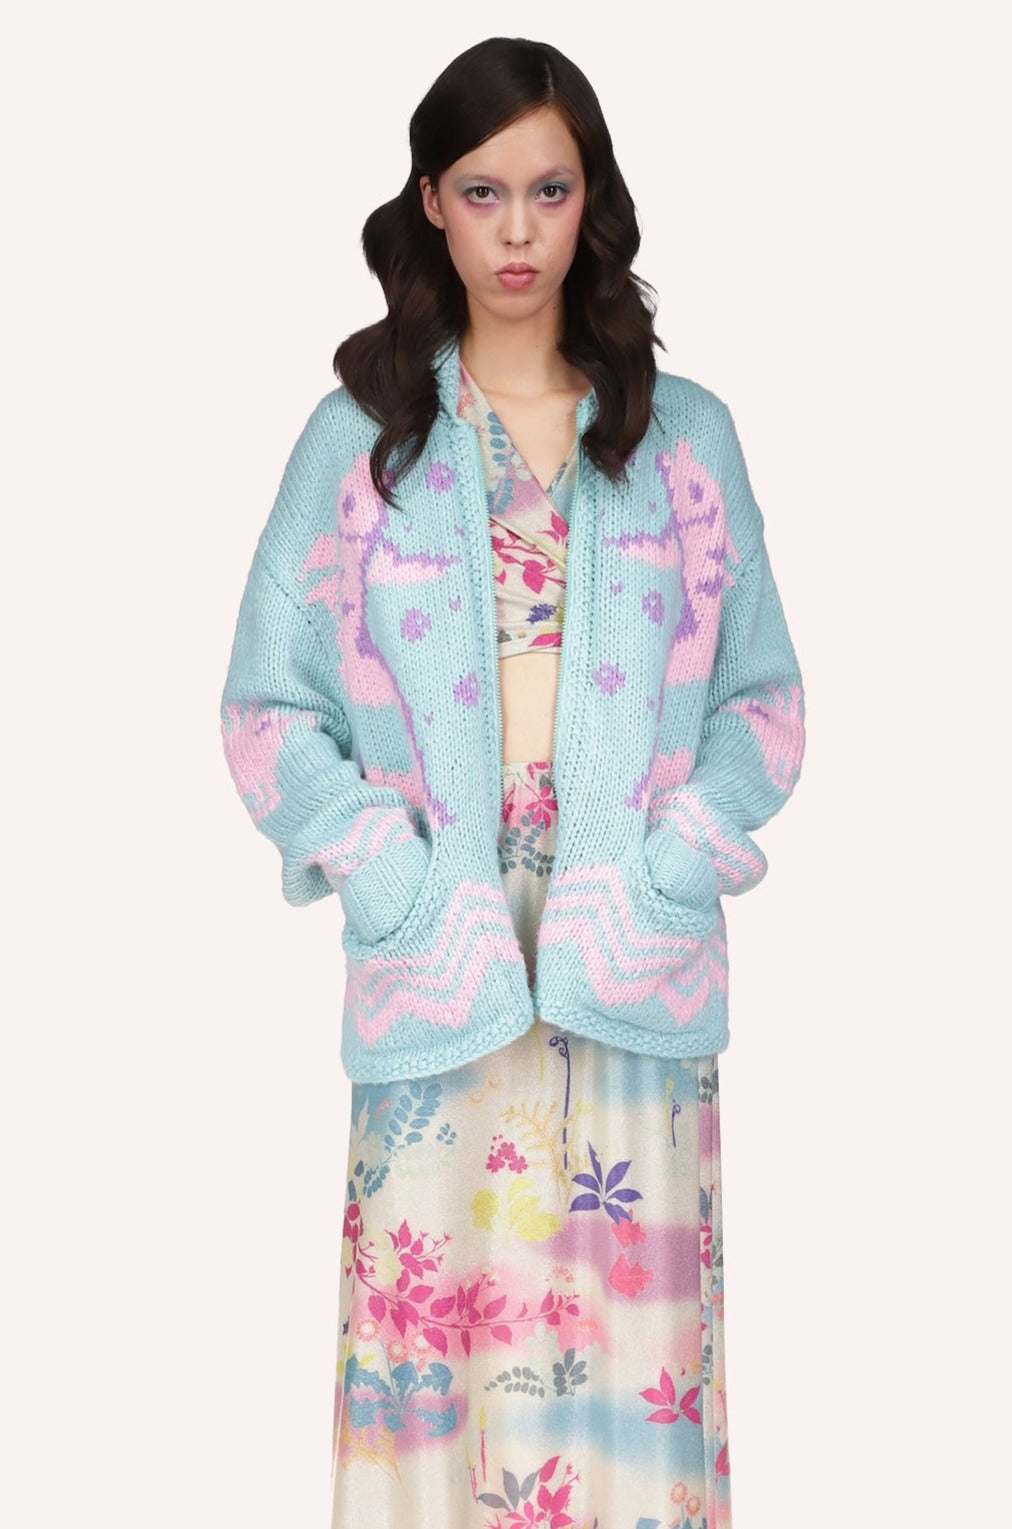 Seashore Hand Knit Cardigan, Powder Blue color with pink sea design, 2-pockets, long sleeves